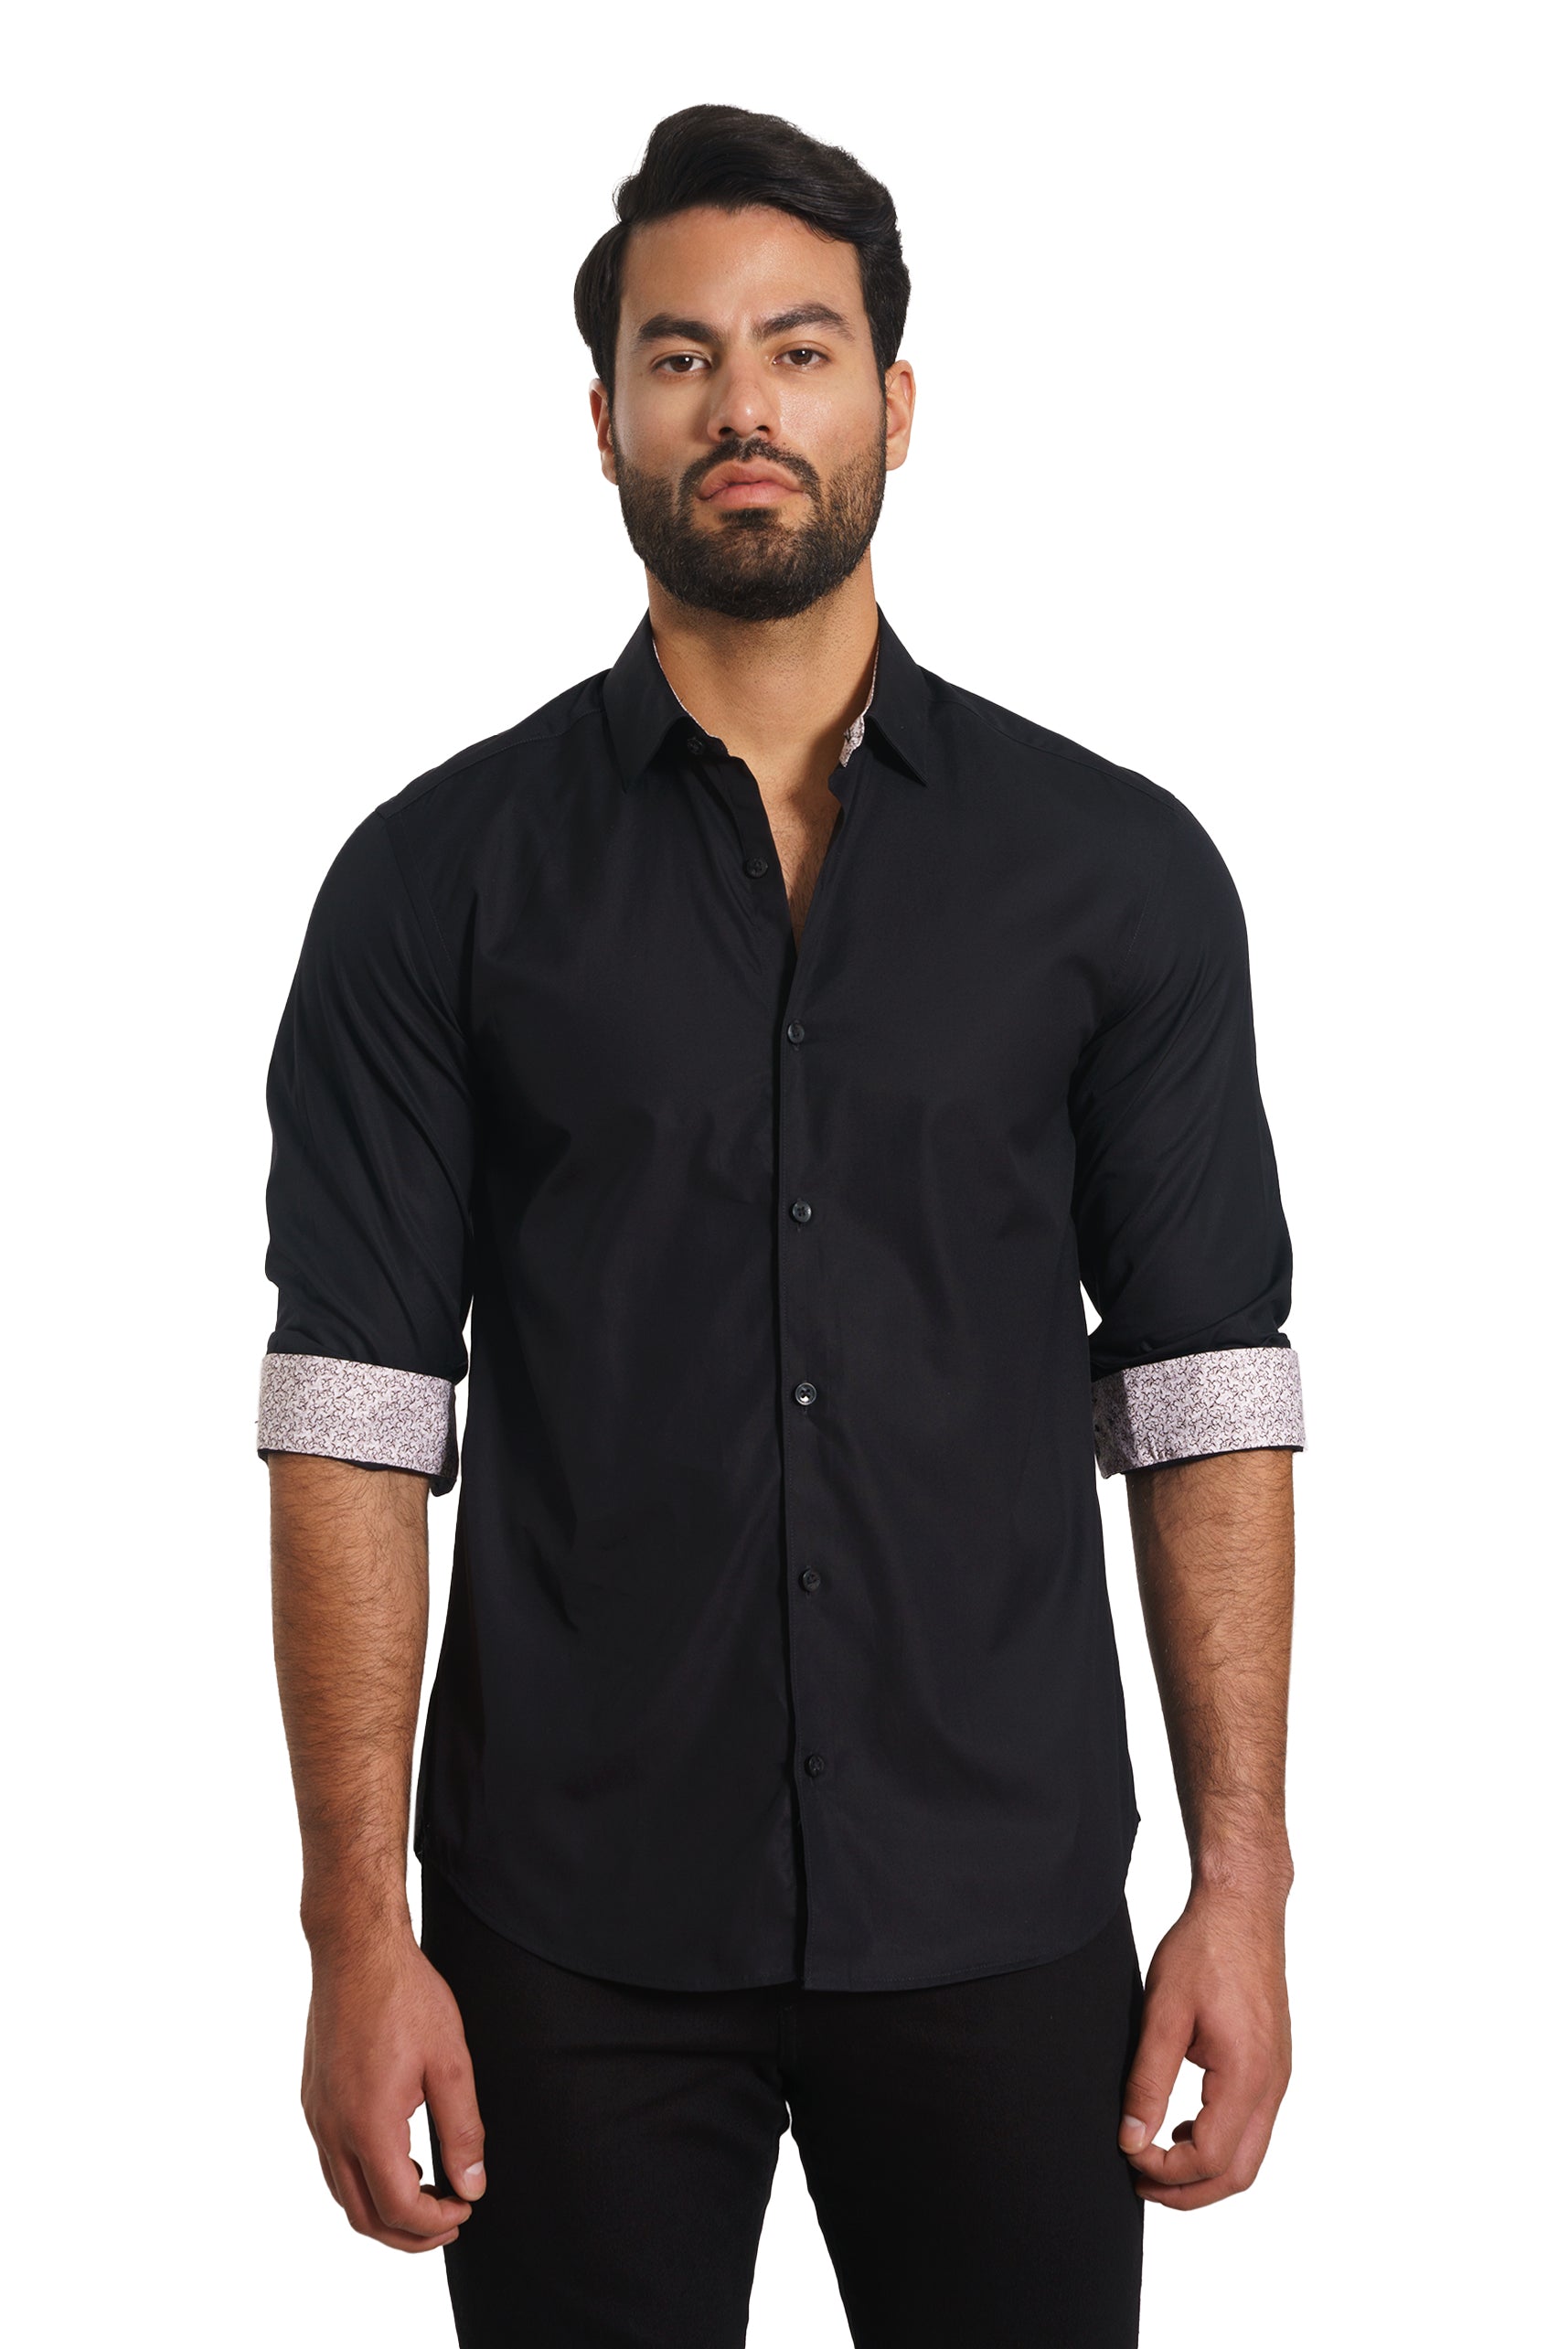 Black Long Sleeve Shirt TP-7154 Front